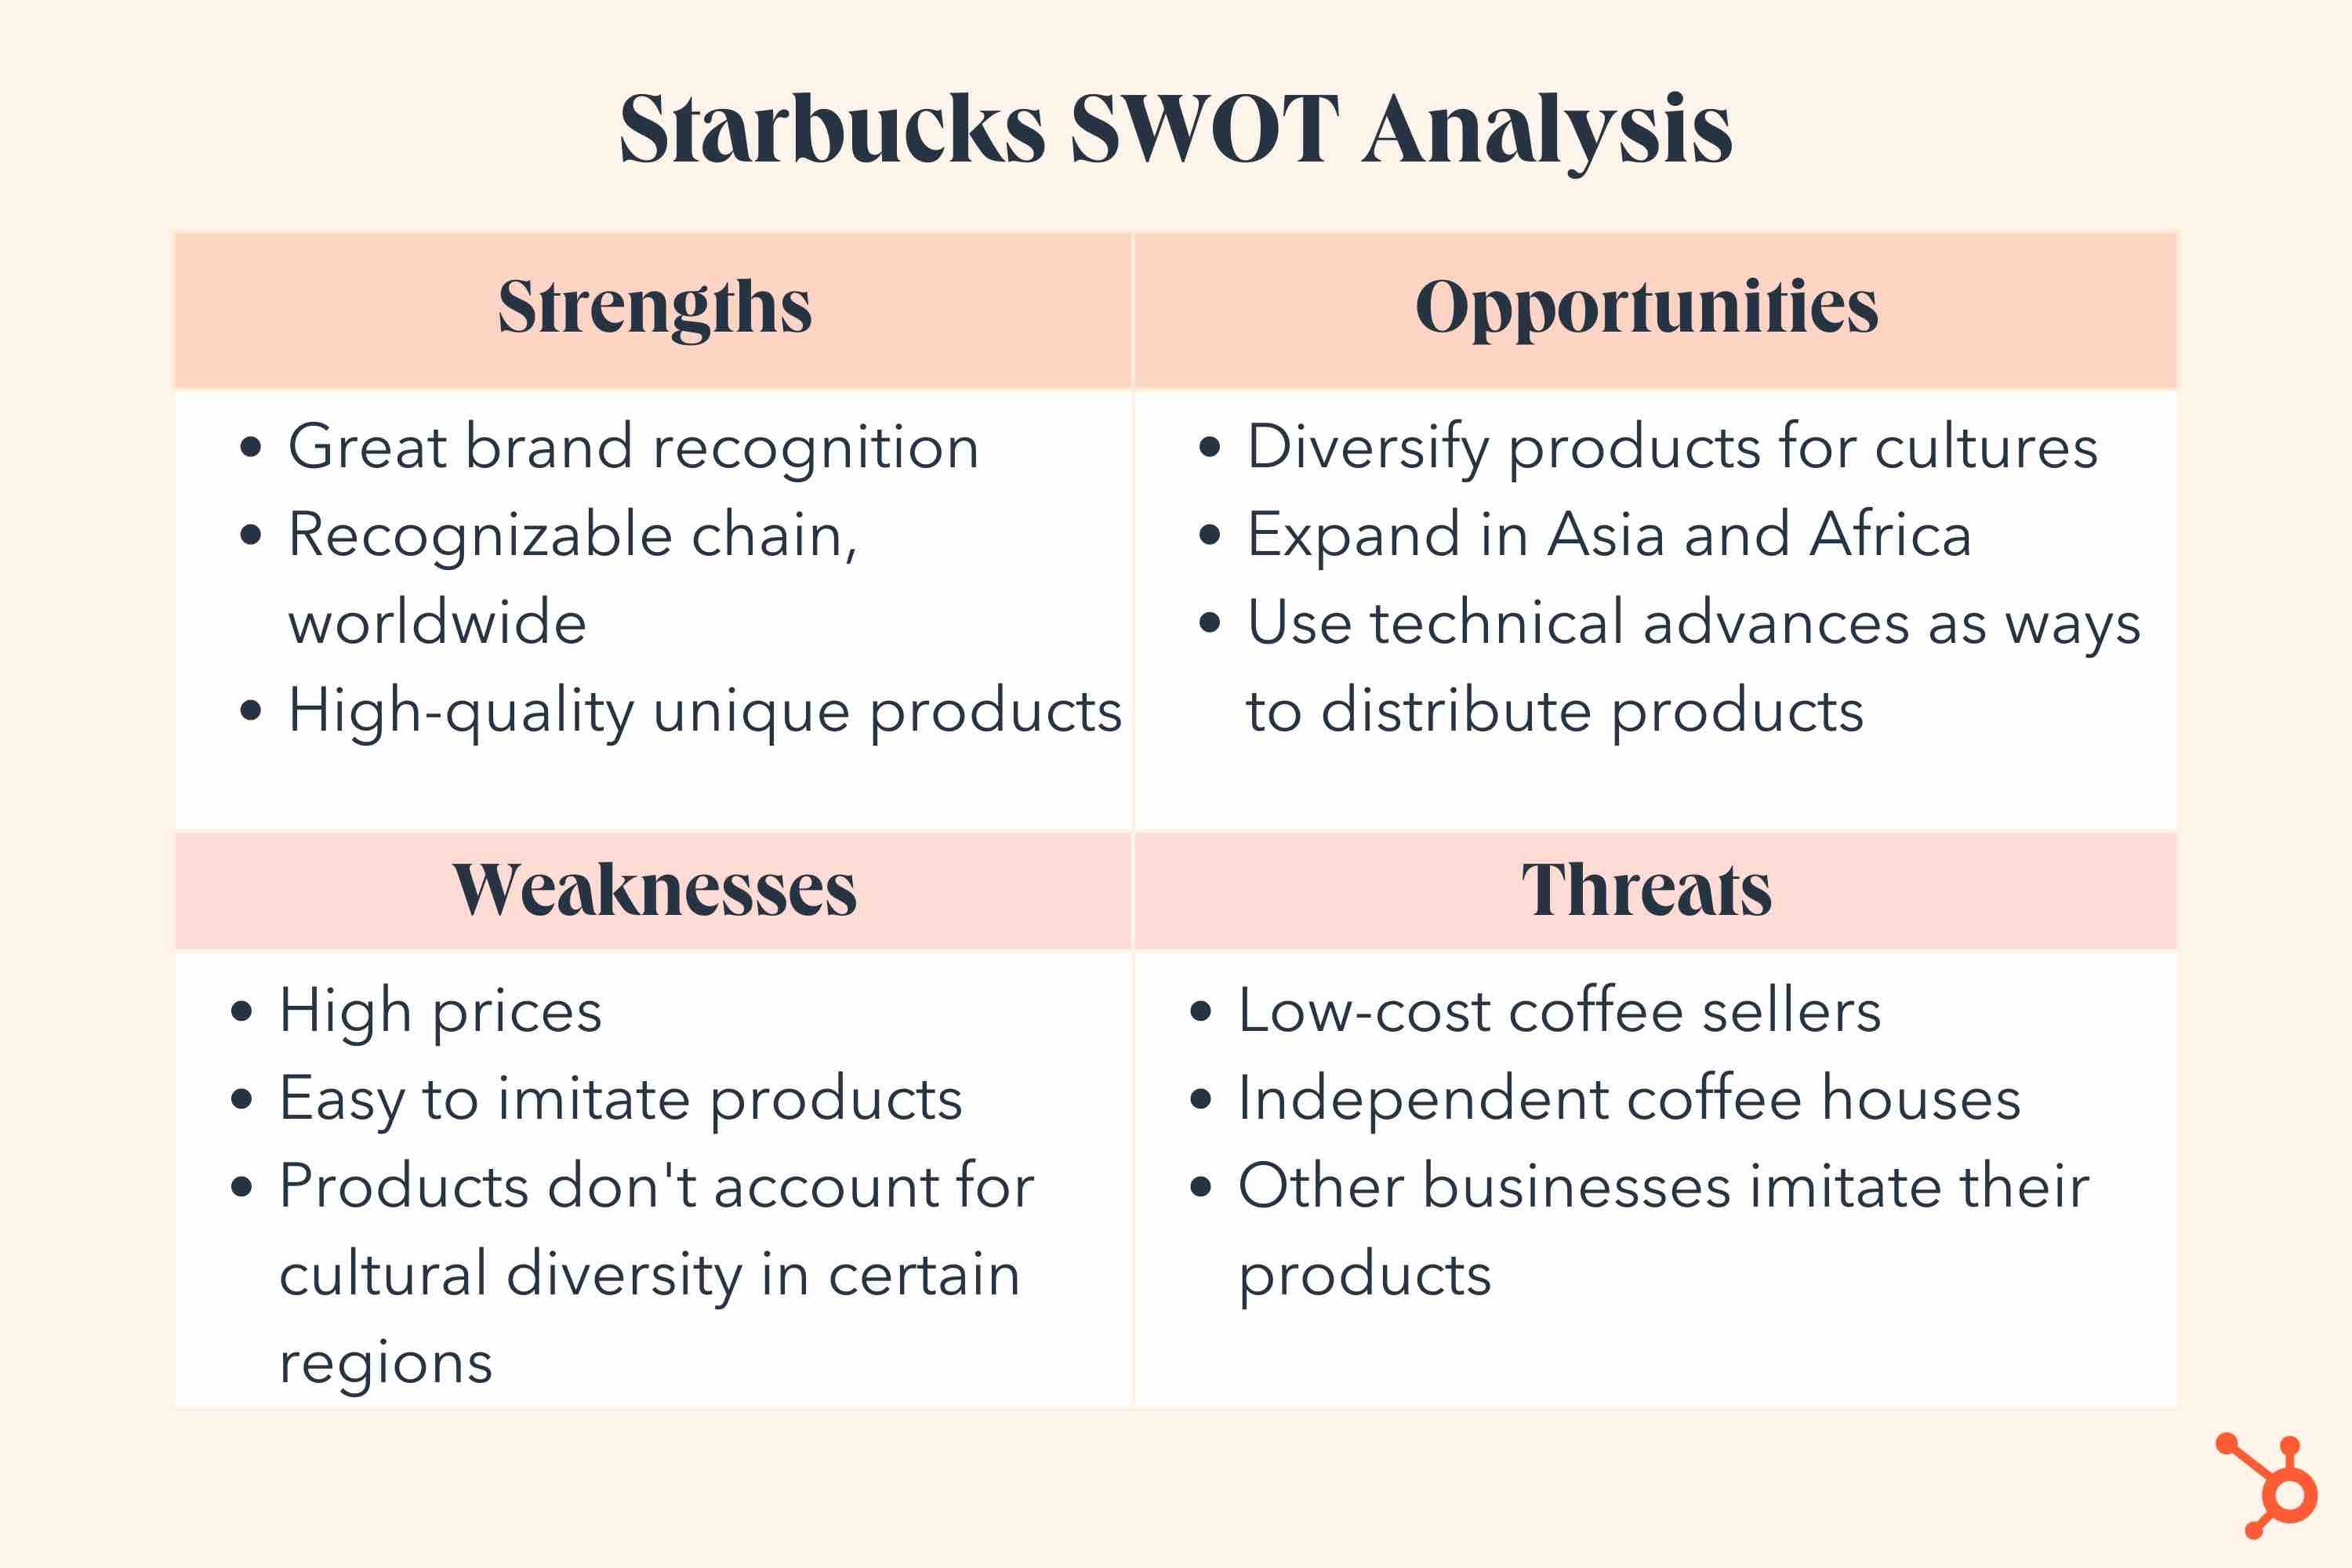 An example SWOT analysis for Starbucks.